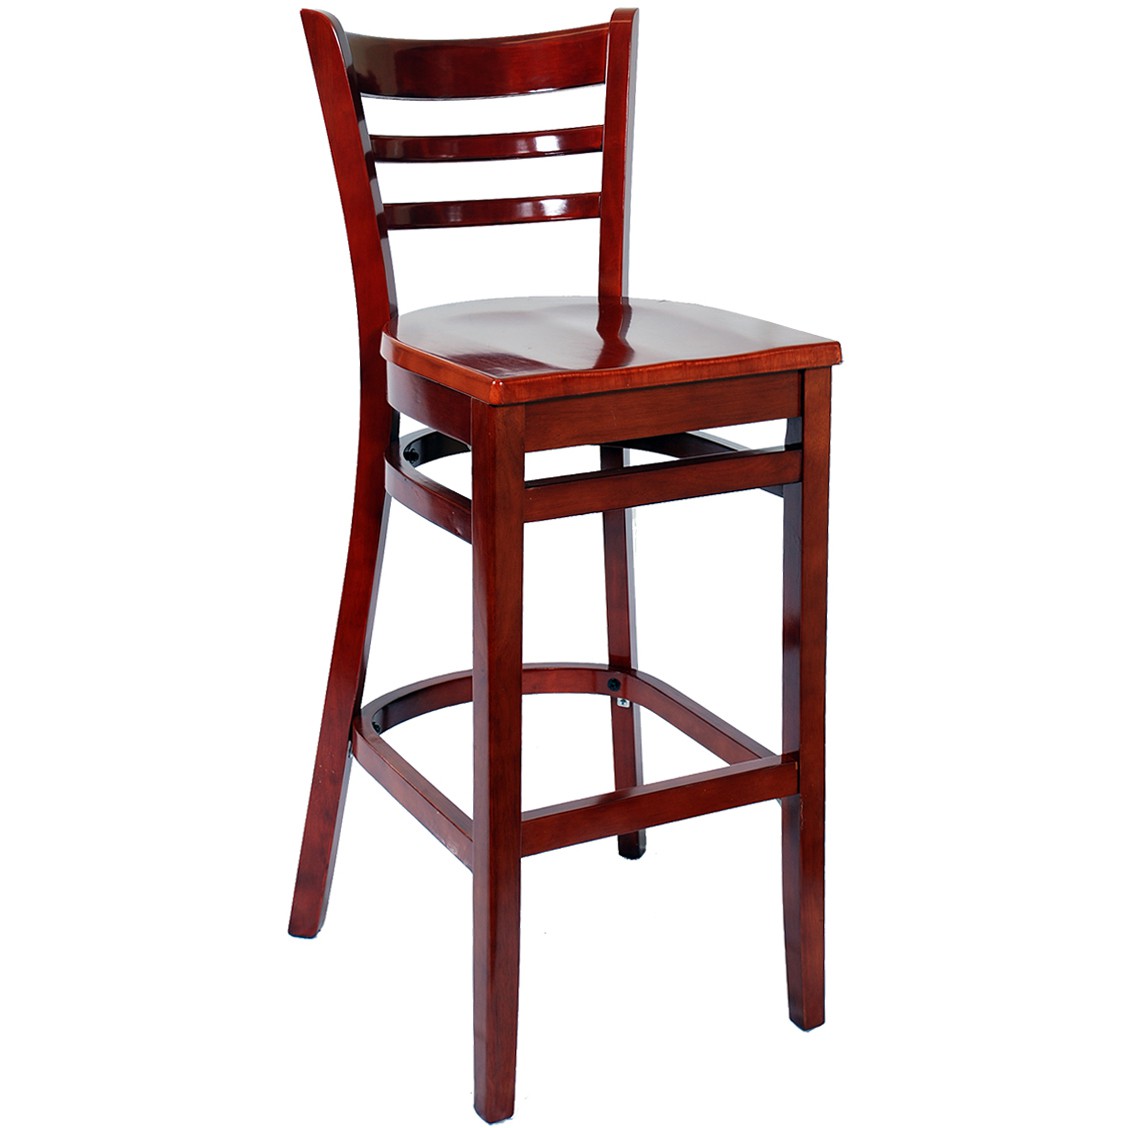 Asian bar stools